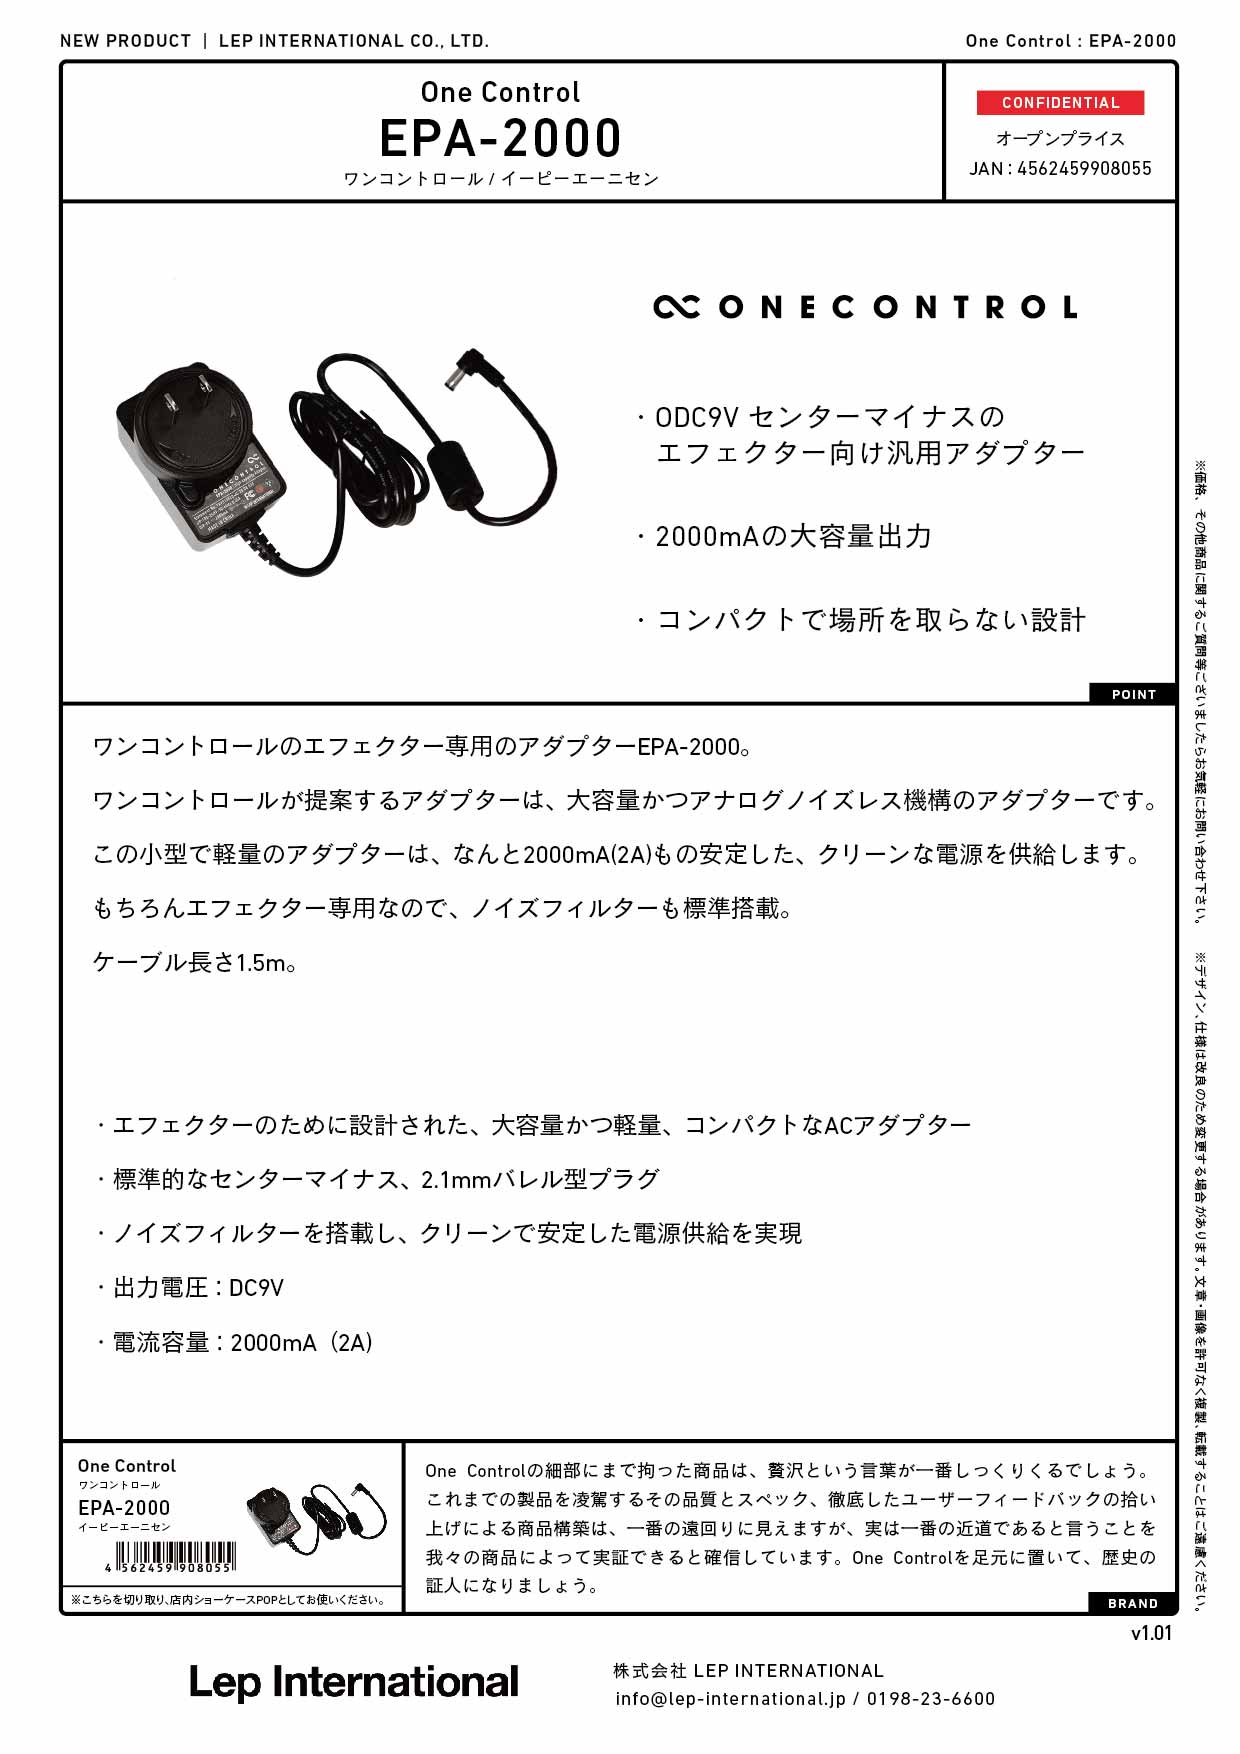 One Control / EPA-2000